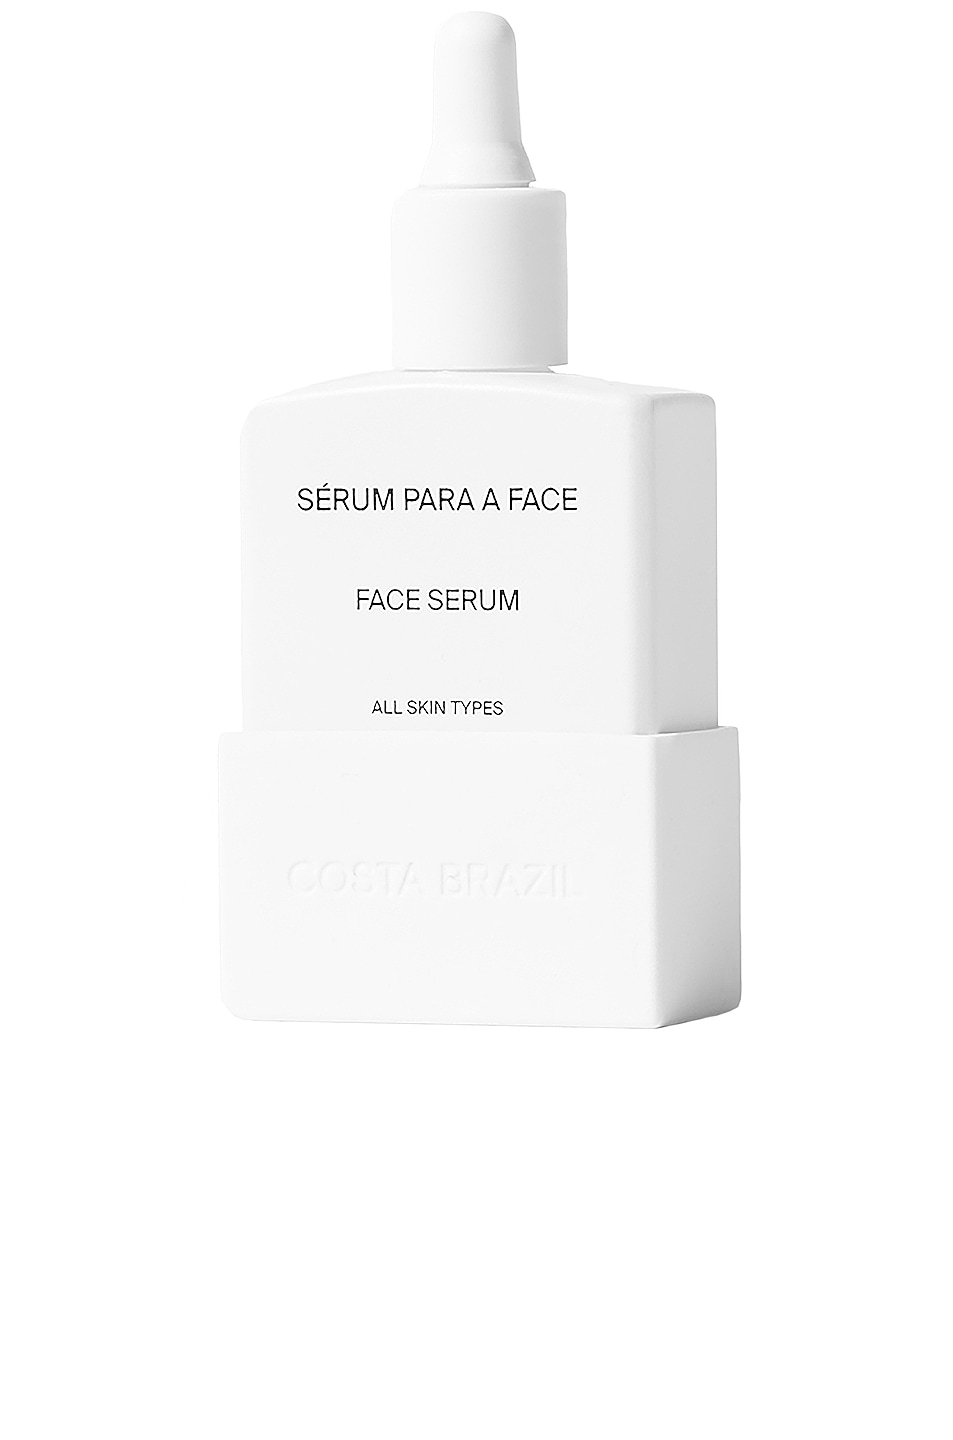 Serum Para A Face in Beauty: NA